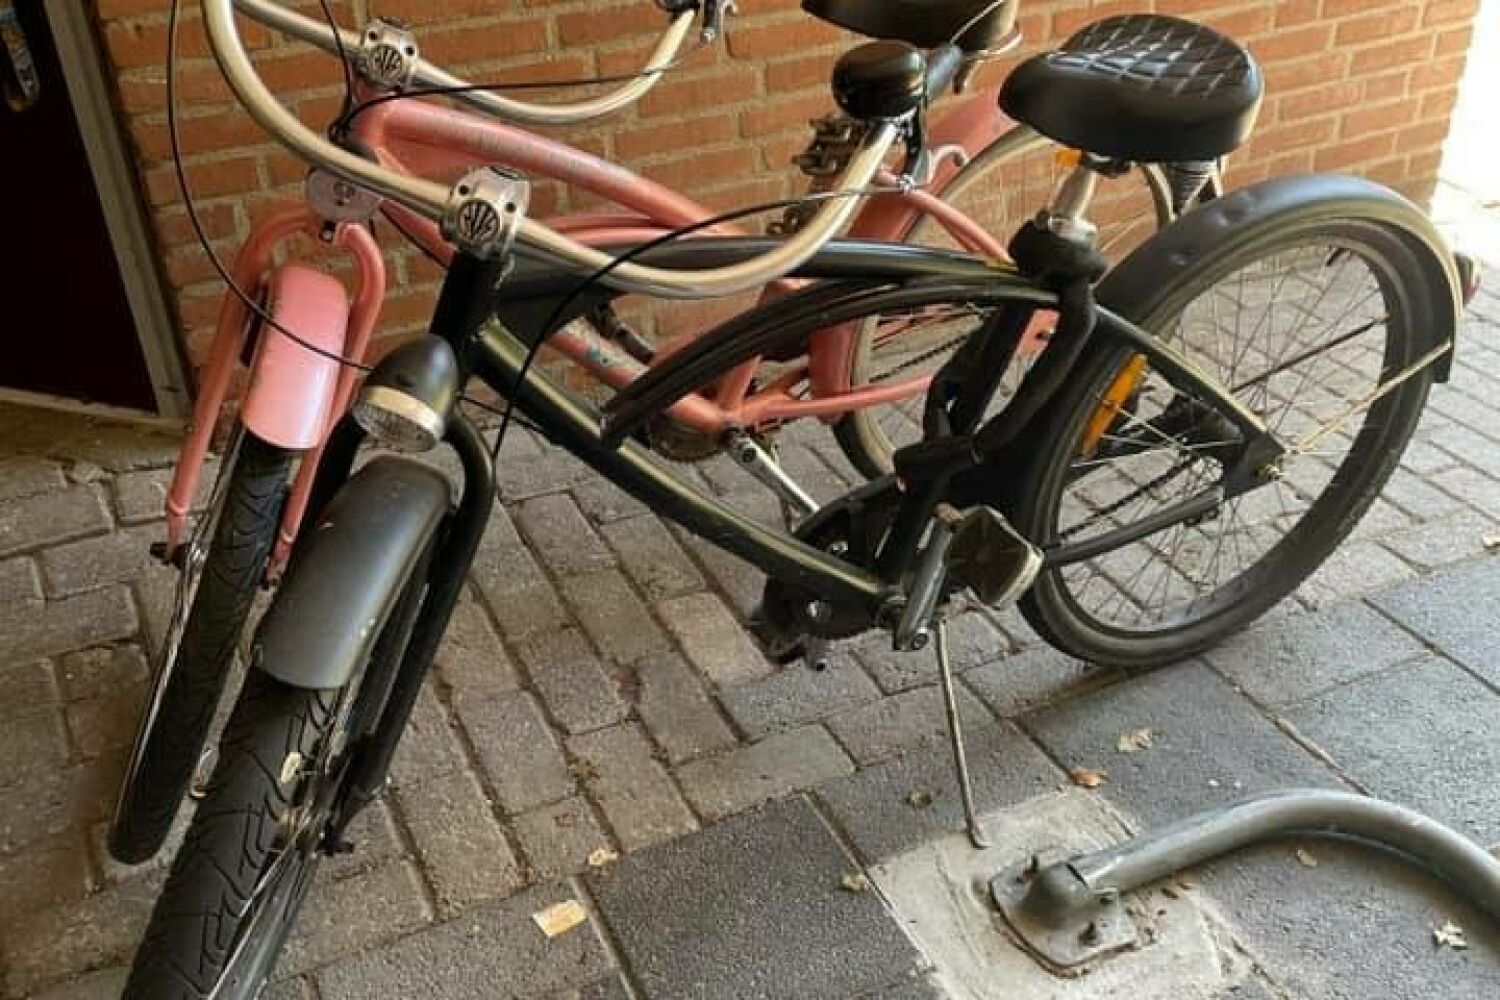 Opsommen bon formule Kustom kruiser bikes: The black lowrider & French kitty Bike - Tweedehands  Stadsfiets - Bikaroo